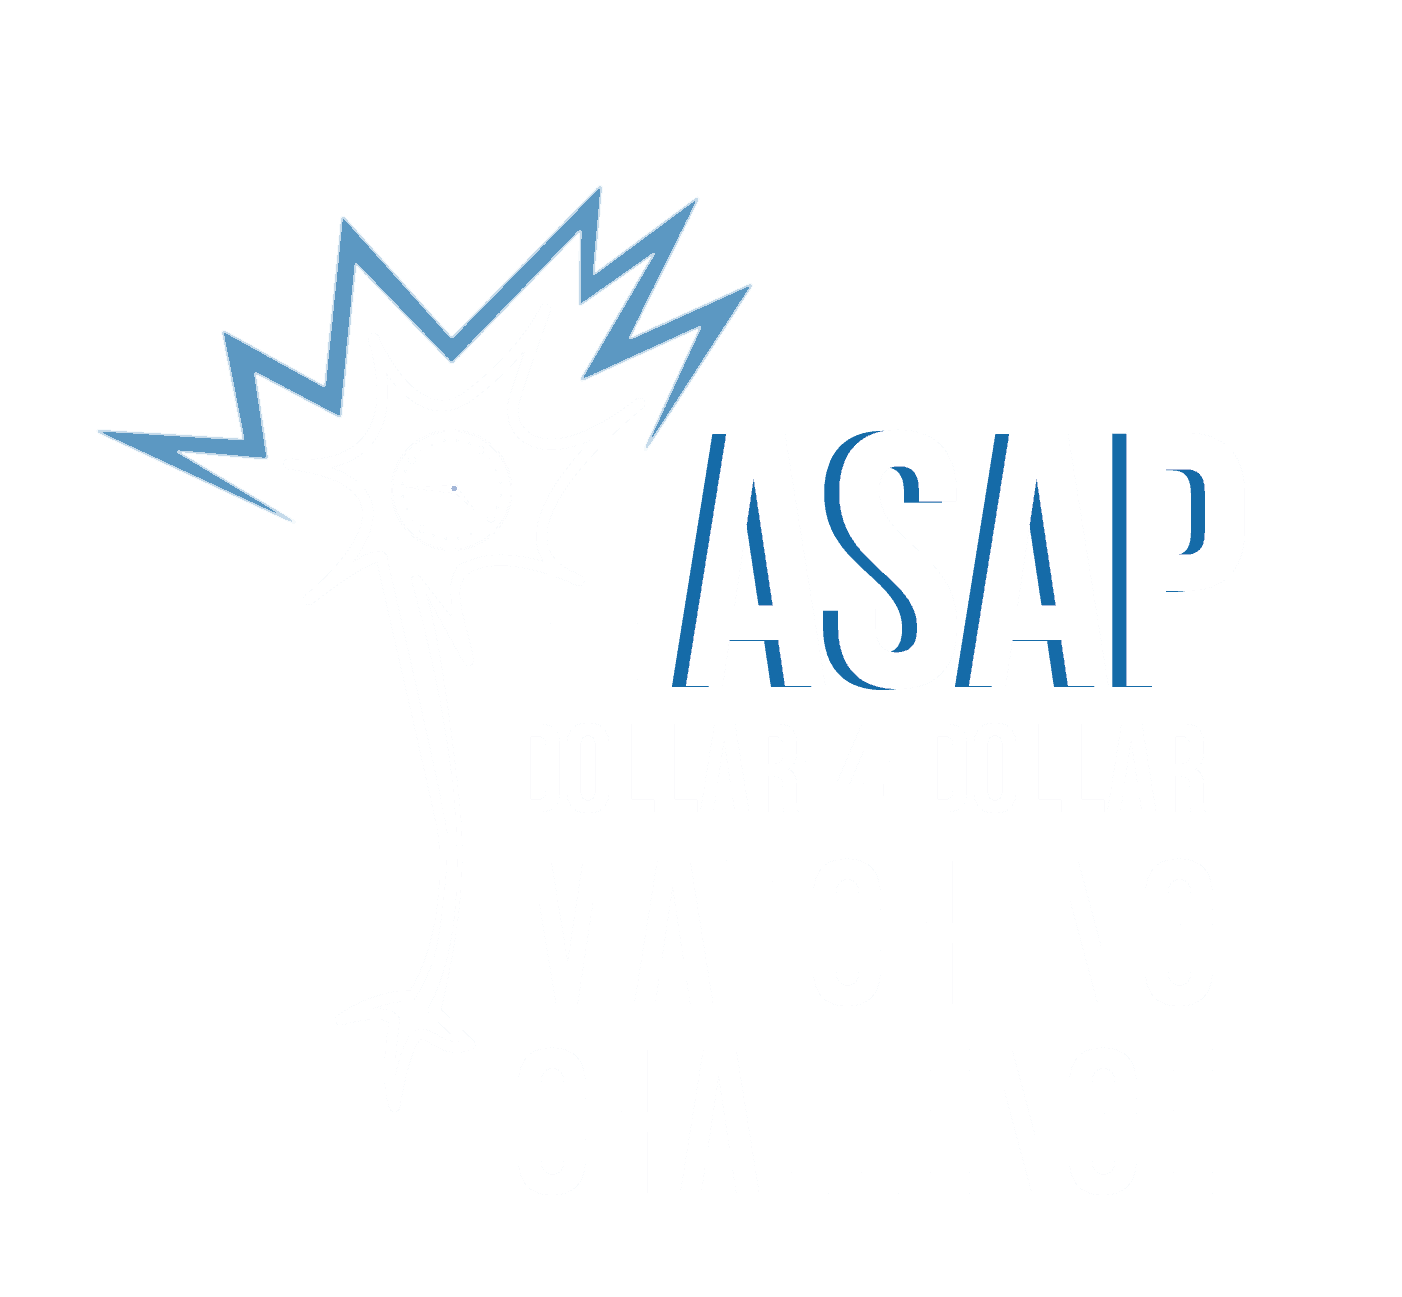 The ASAP Dollar-4-Dollar Matching Challenge